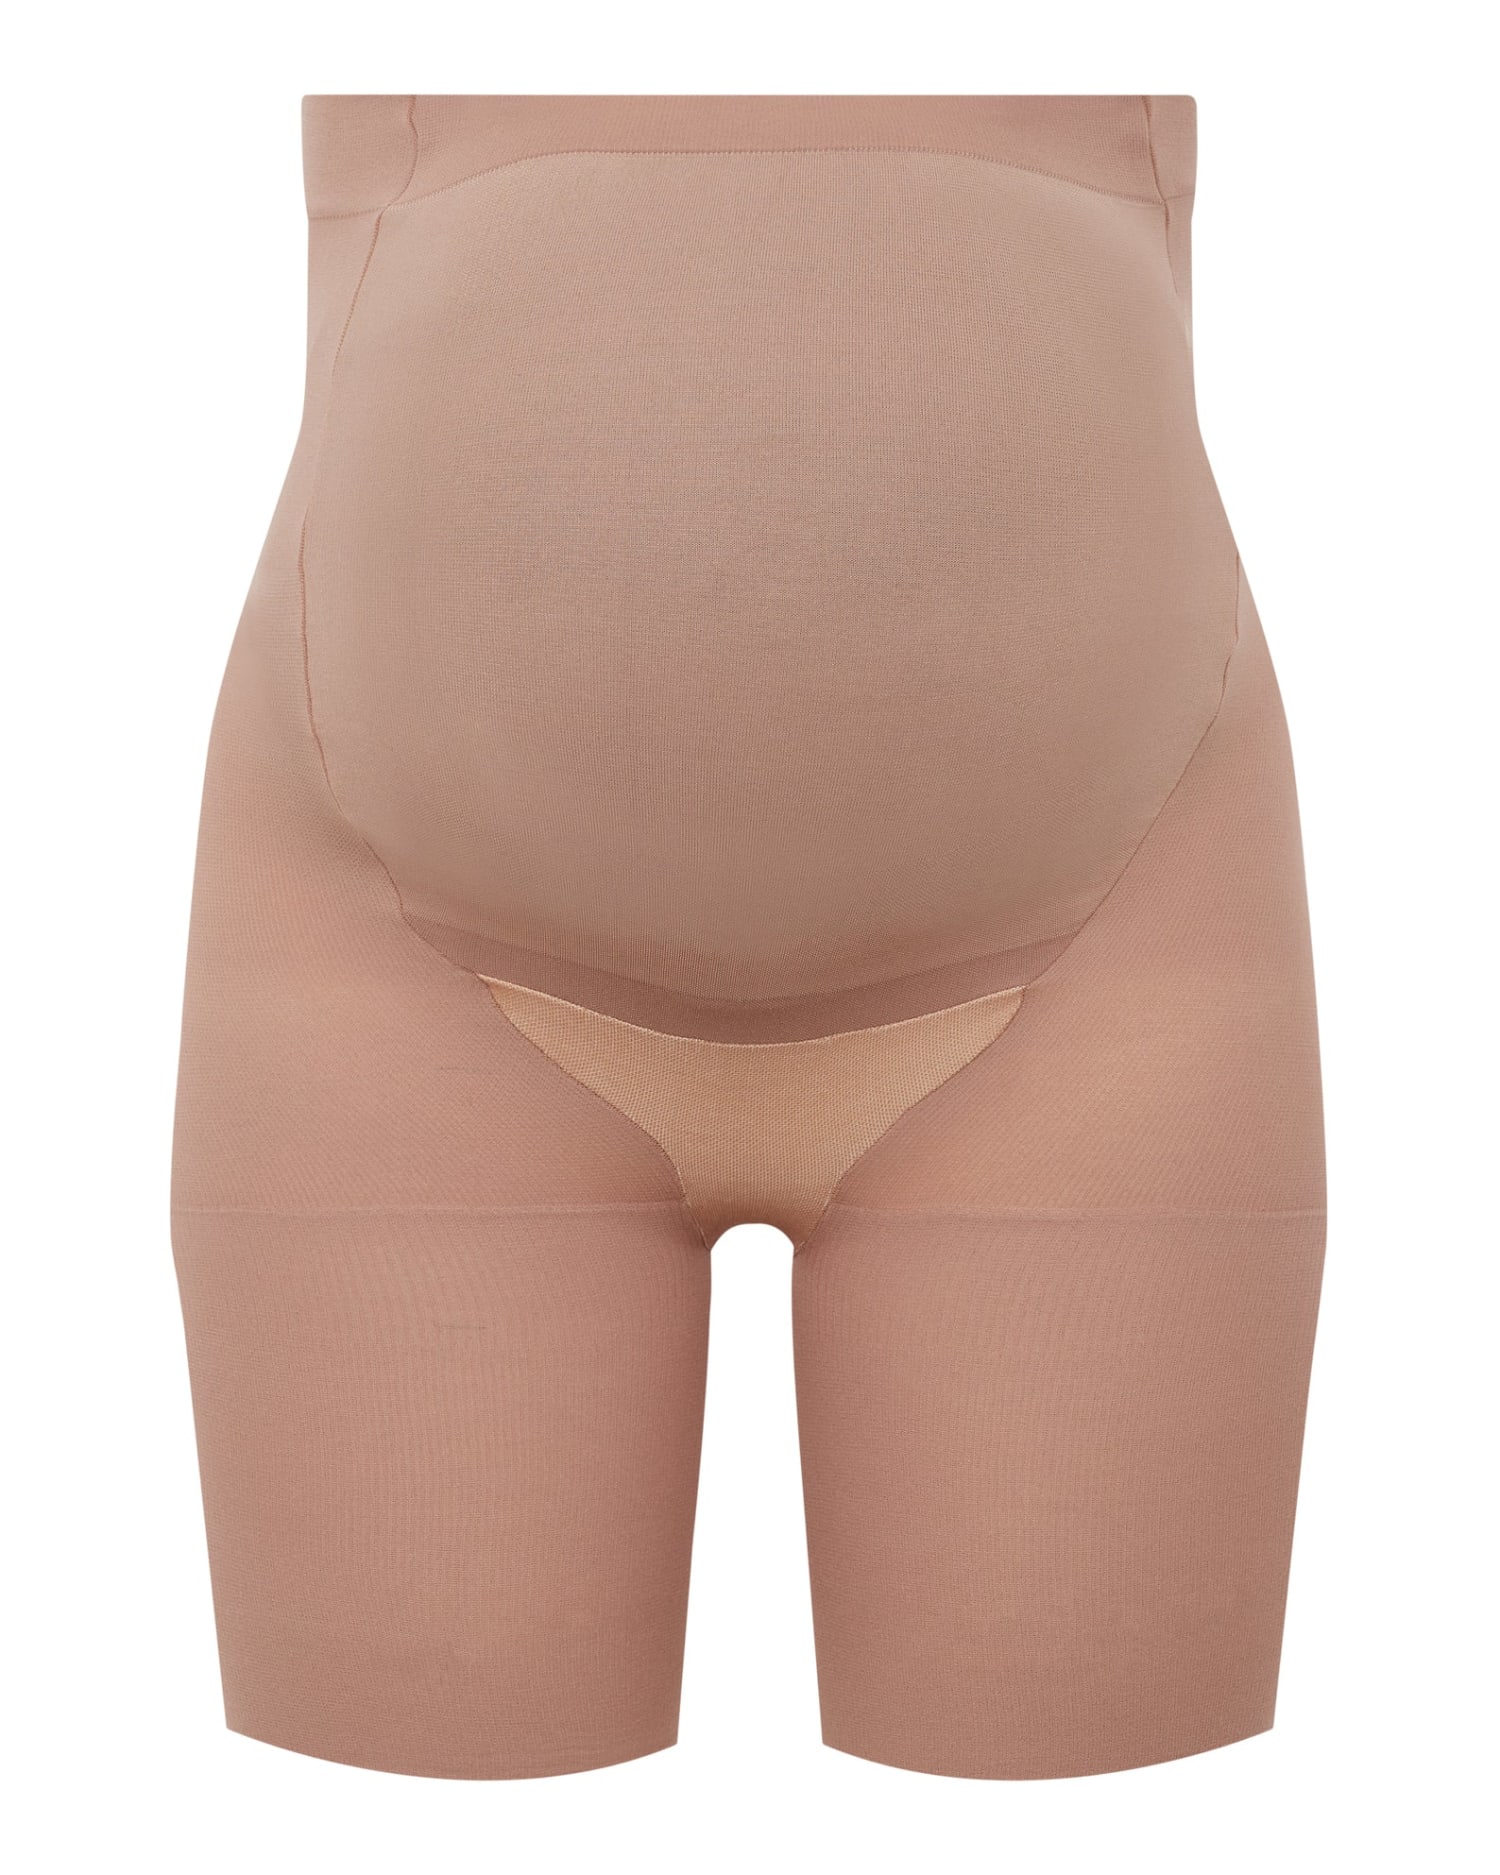 SHEIN Maternity Seamless Stretch High Waist Belly Support Compression  Underwear, Everyday Wear